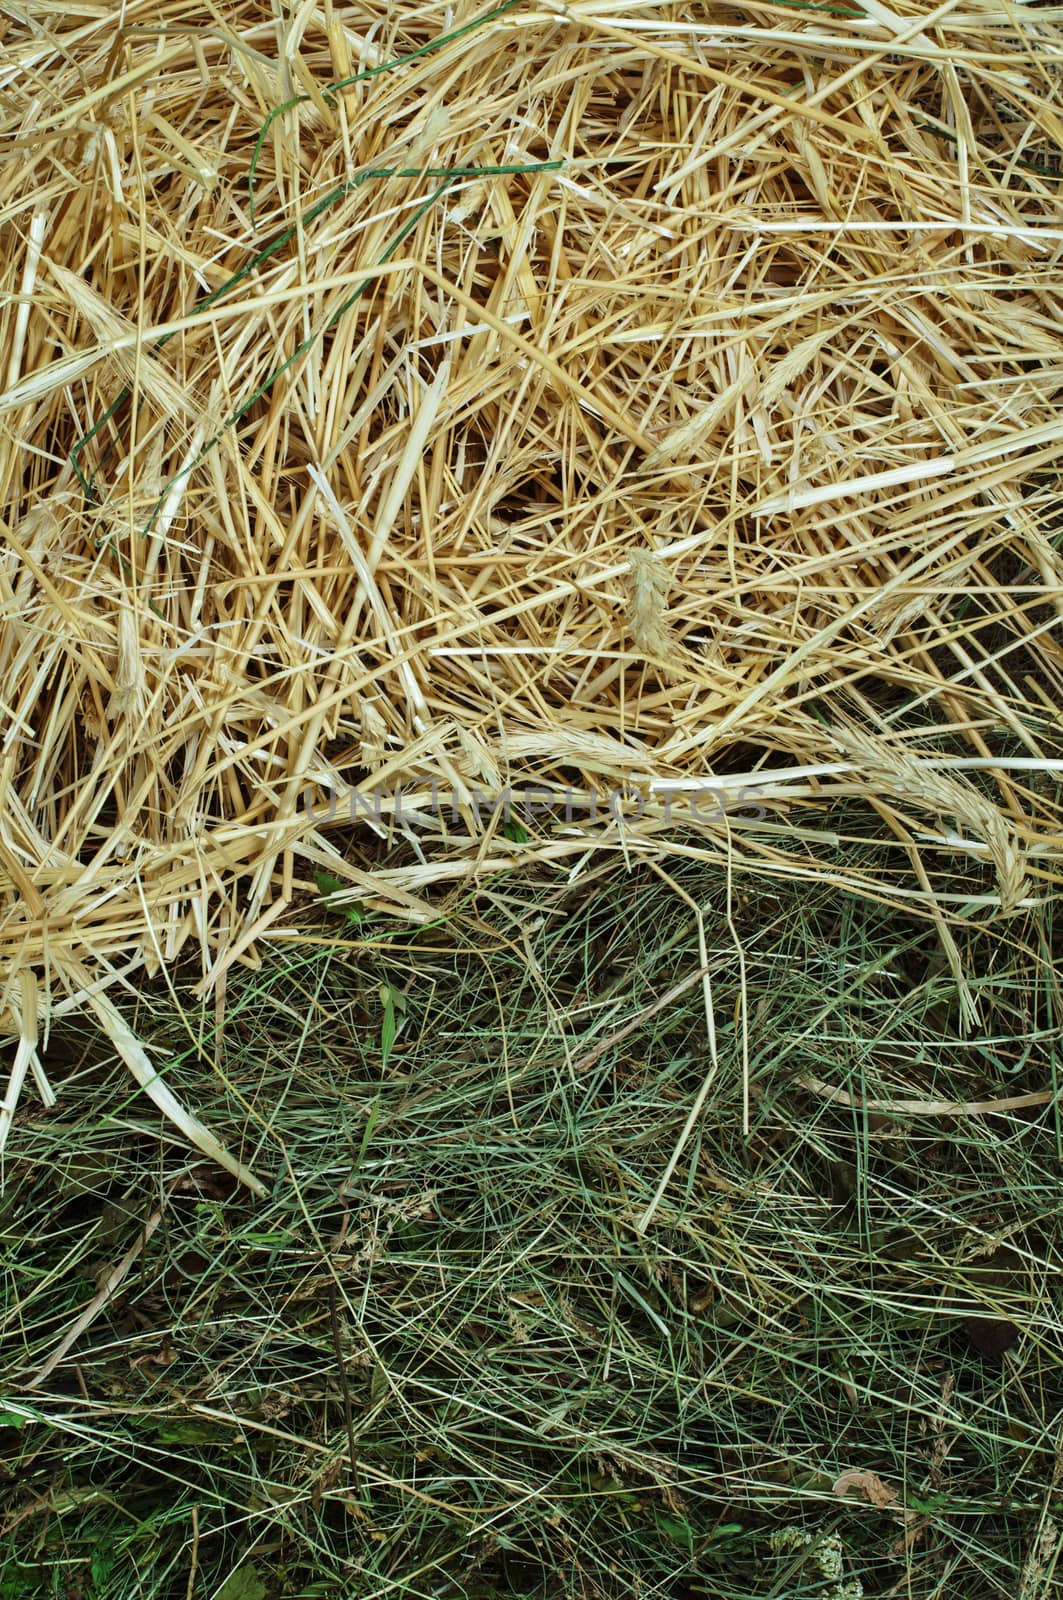 Straw and hay close up background. Studio shot .